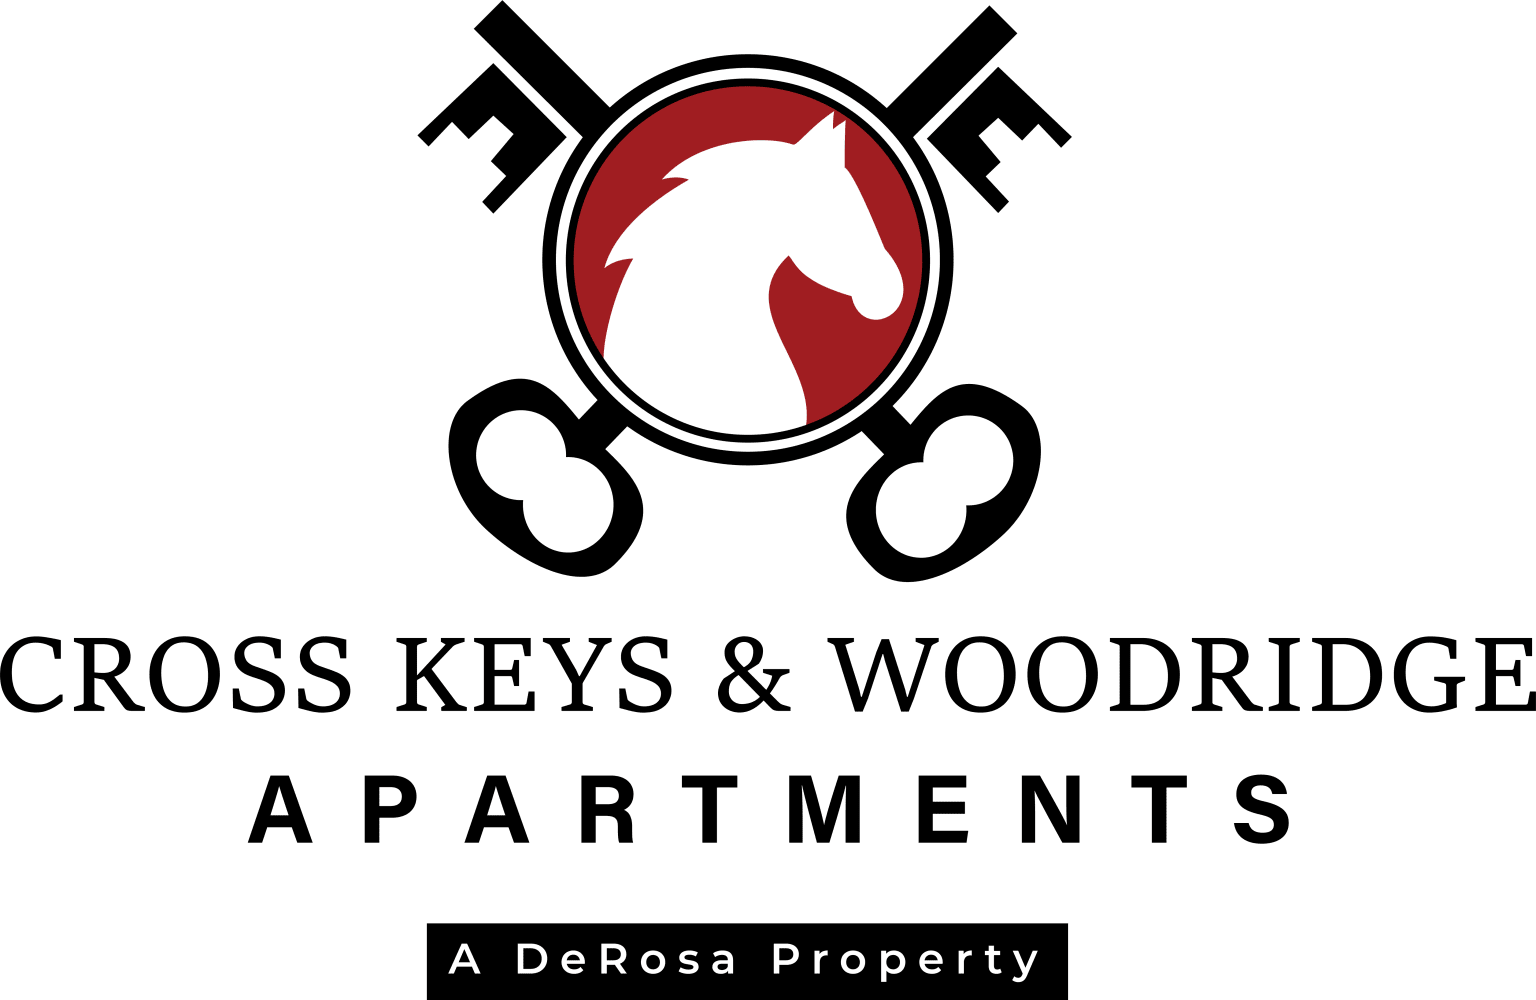 Cross Keys and Woodridge